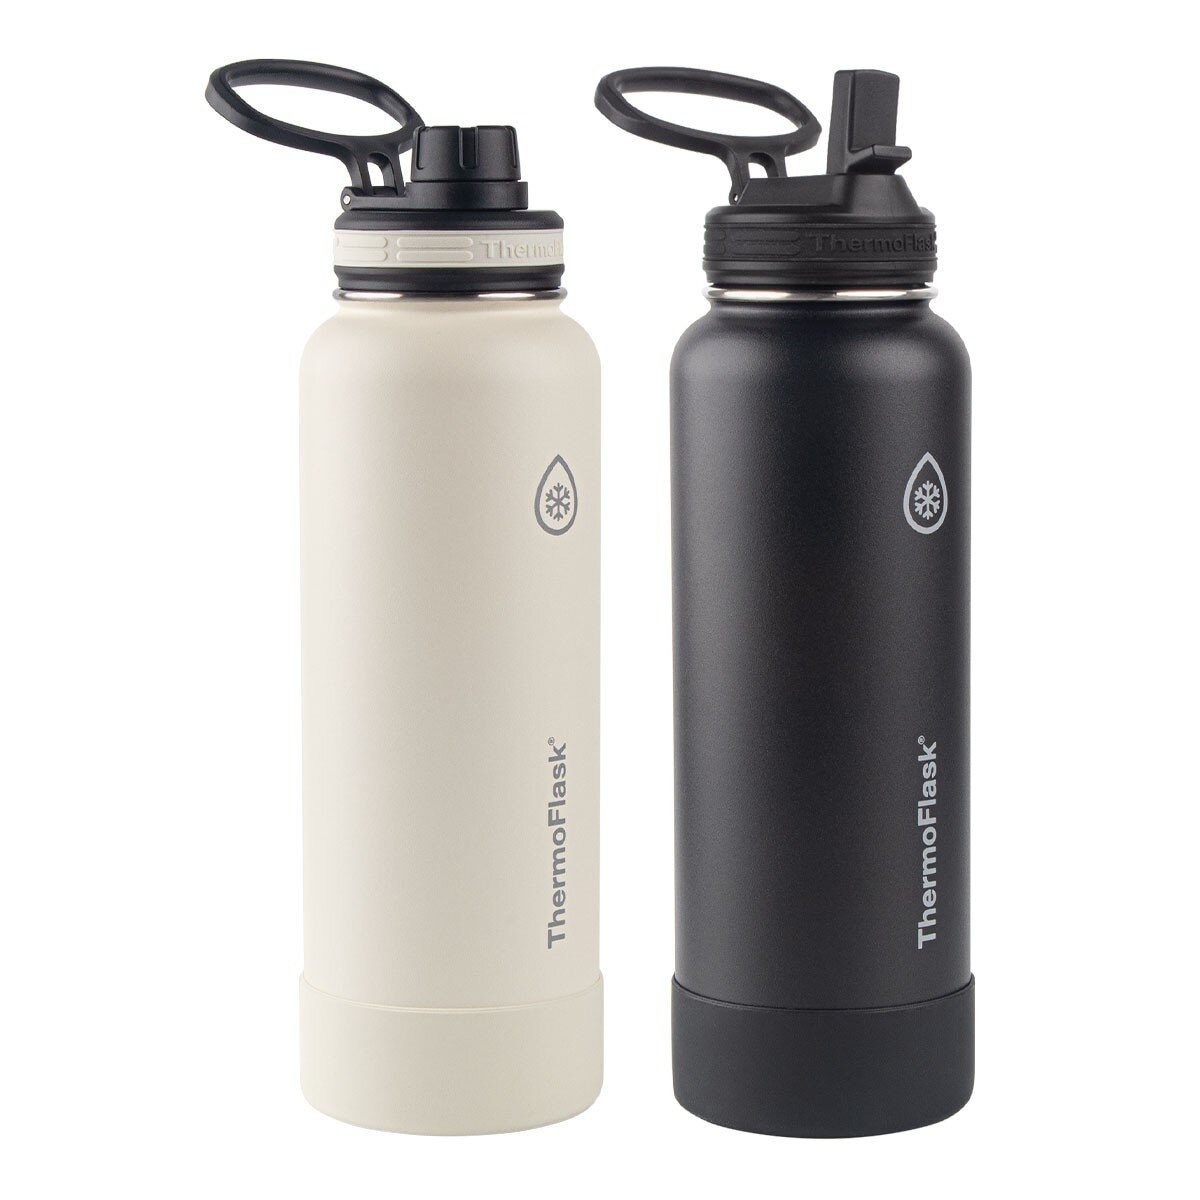 ThermoFlask 不鏽鋼保冷瓶 1.2公升 X 2件組